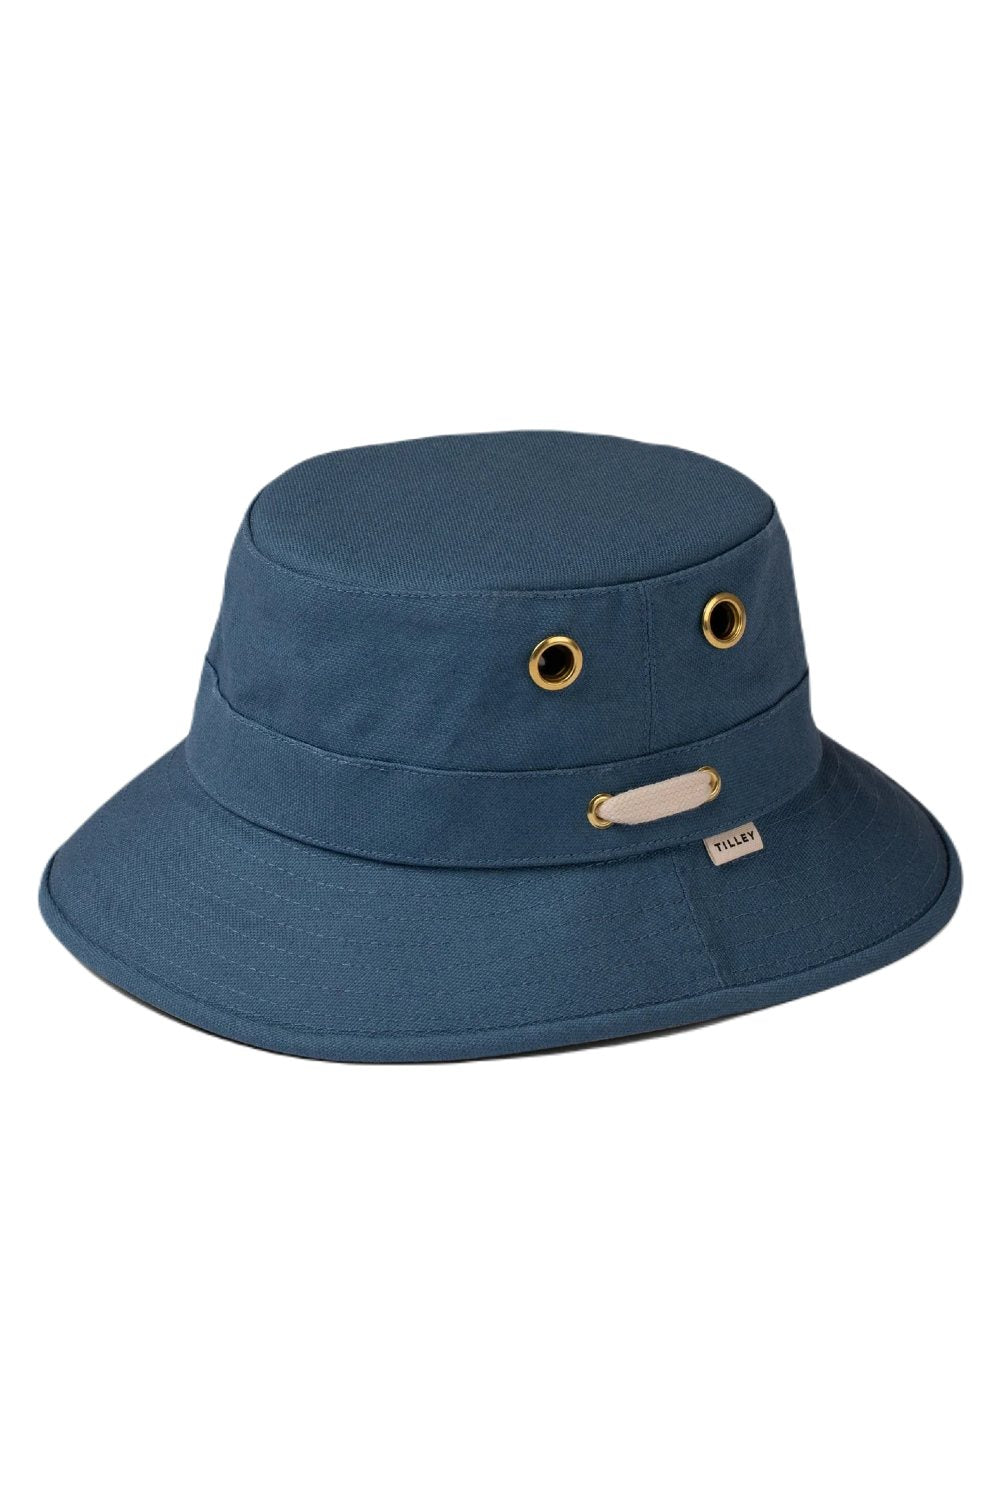 Tilley Hats Iconic Bucket Hat In Denim Blue 